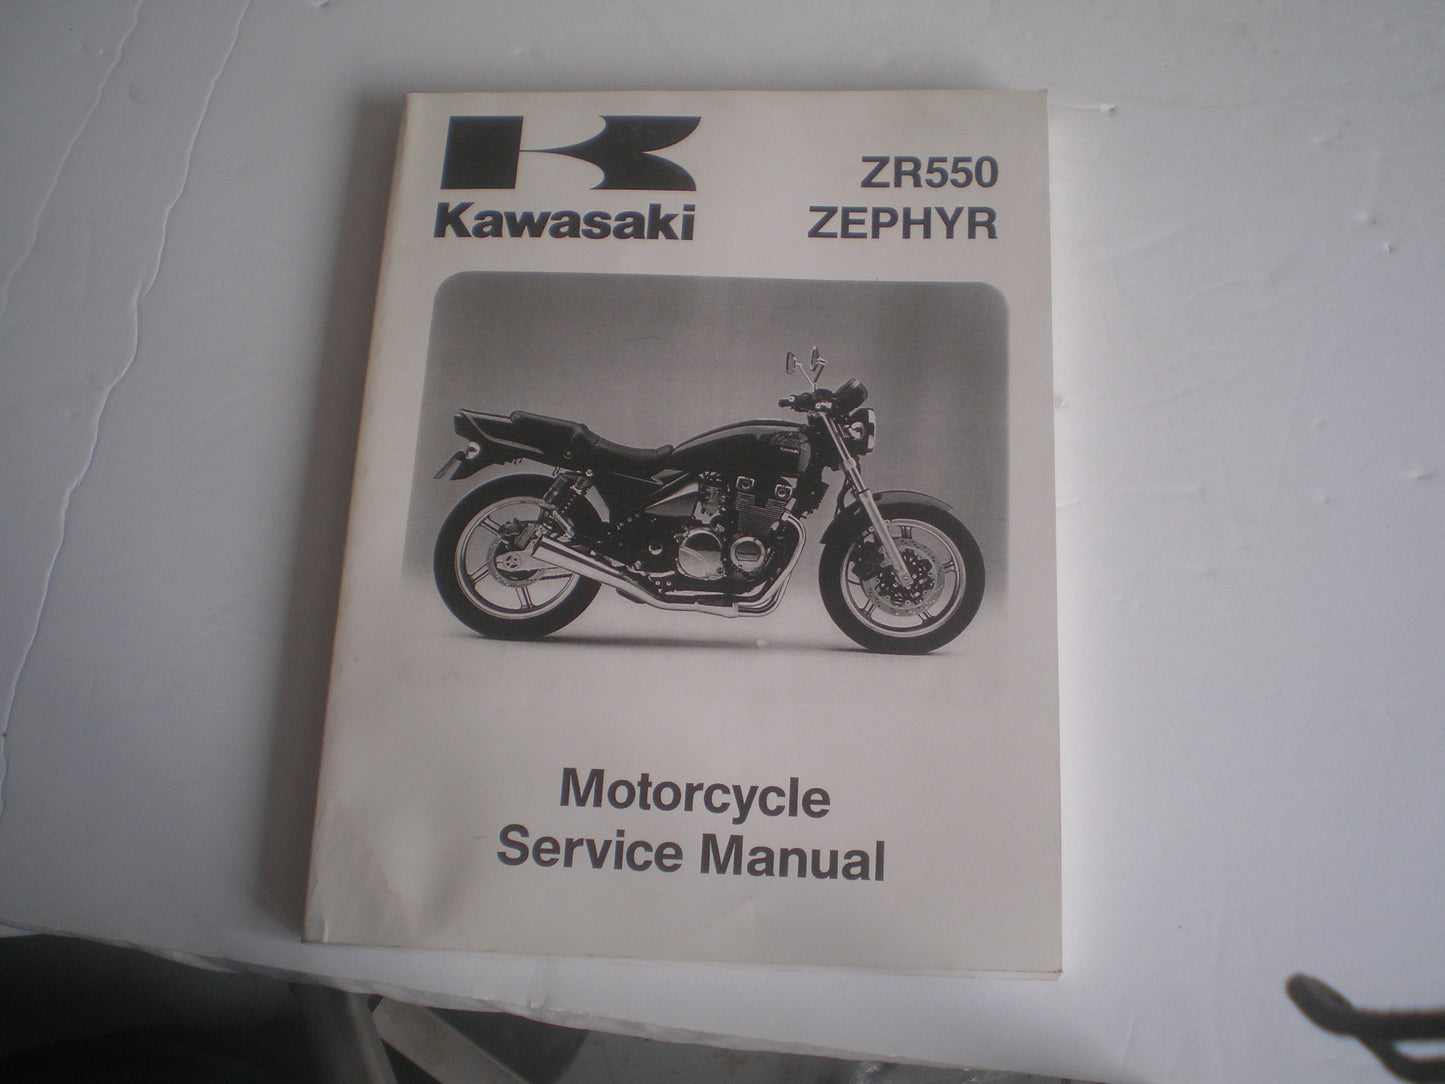 KAWASAKI ZR550  Zephyr  1990-1997  Service Manual  99924-1136-03  #1373.3